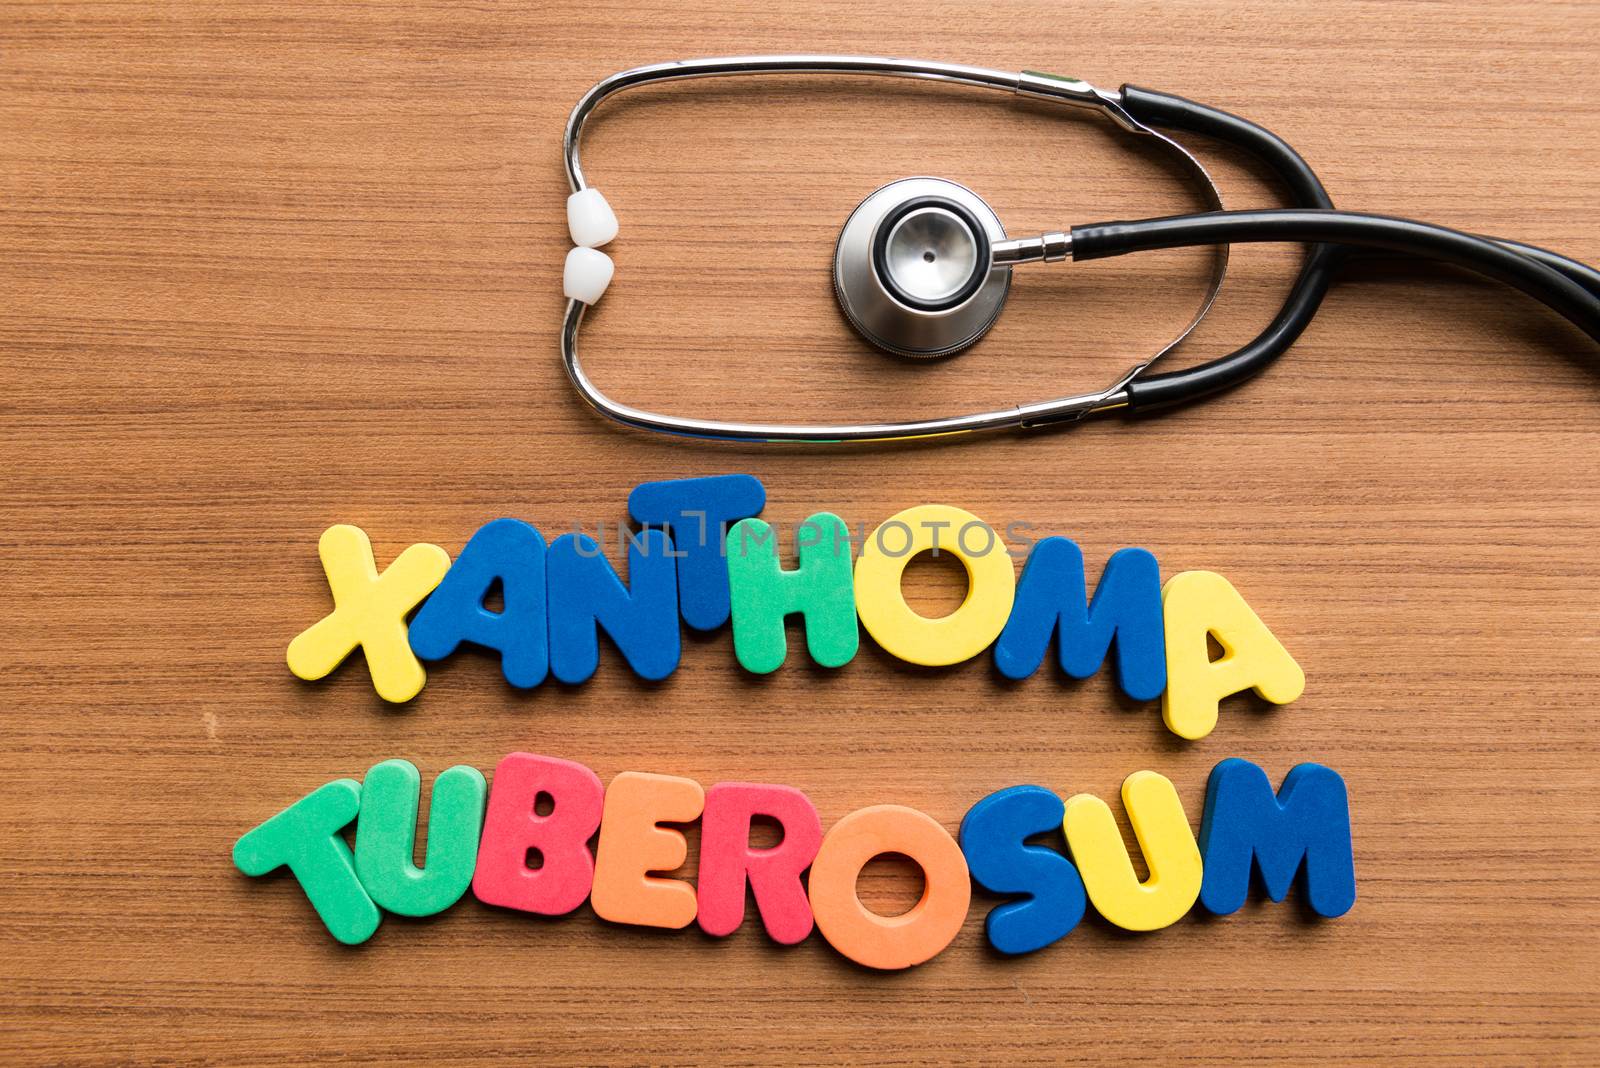 xanthoma tuberosum colorful word with stethoscope by sohel.parvez@hotmail.com